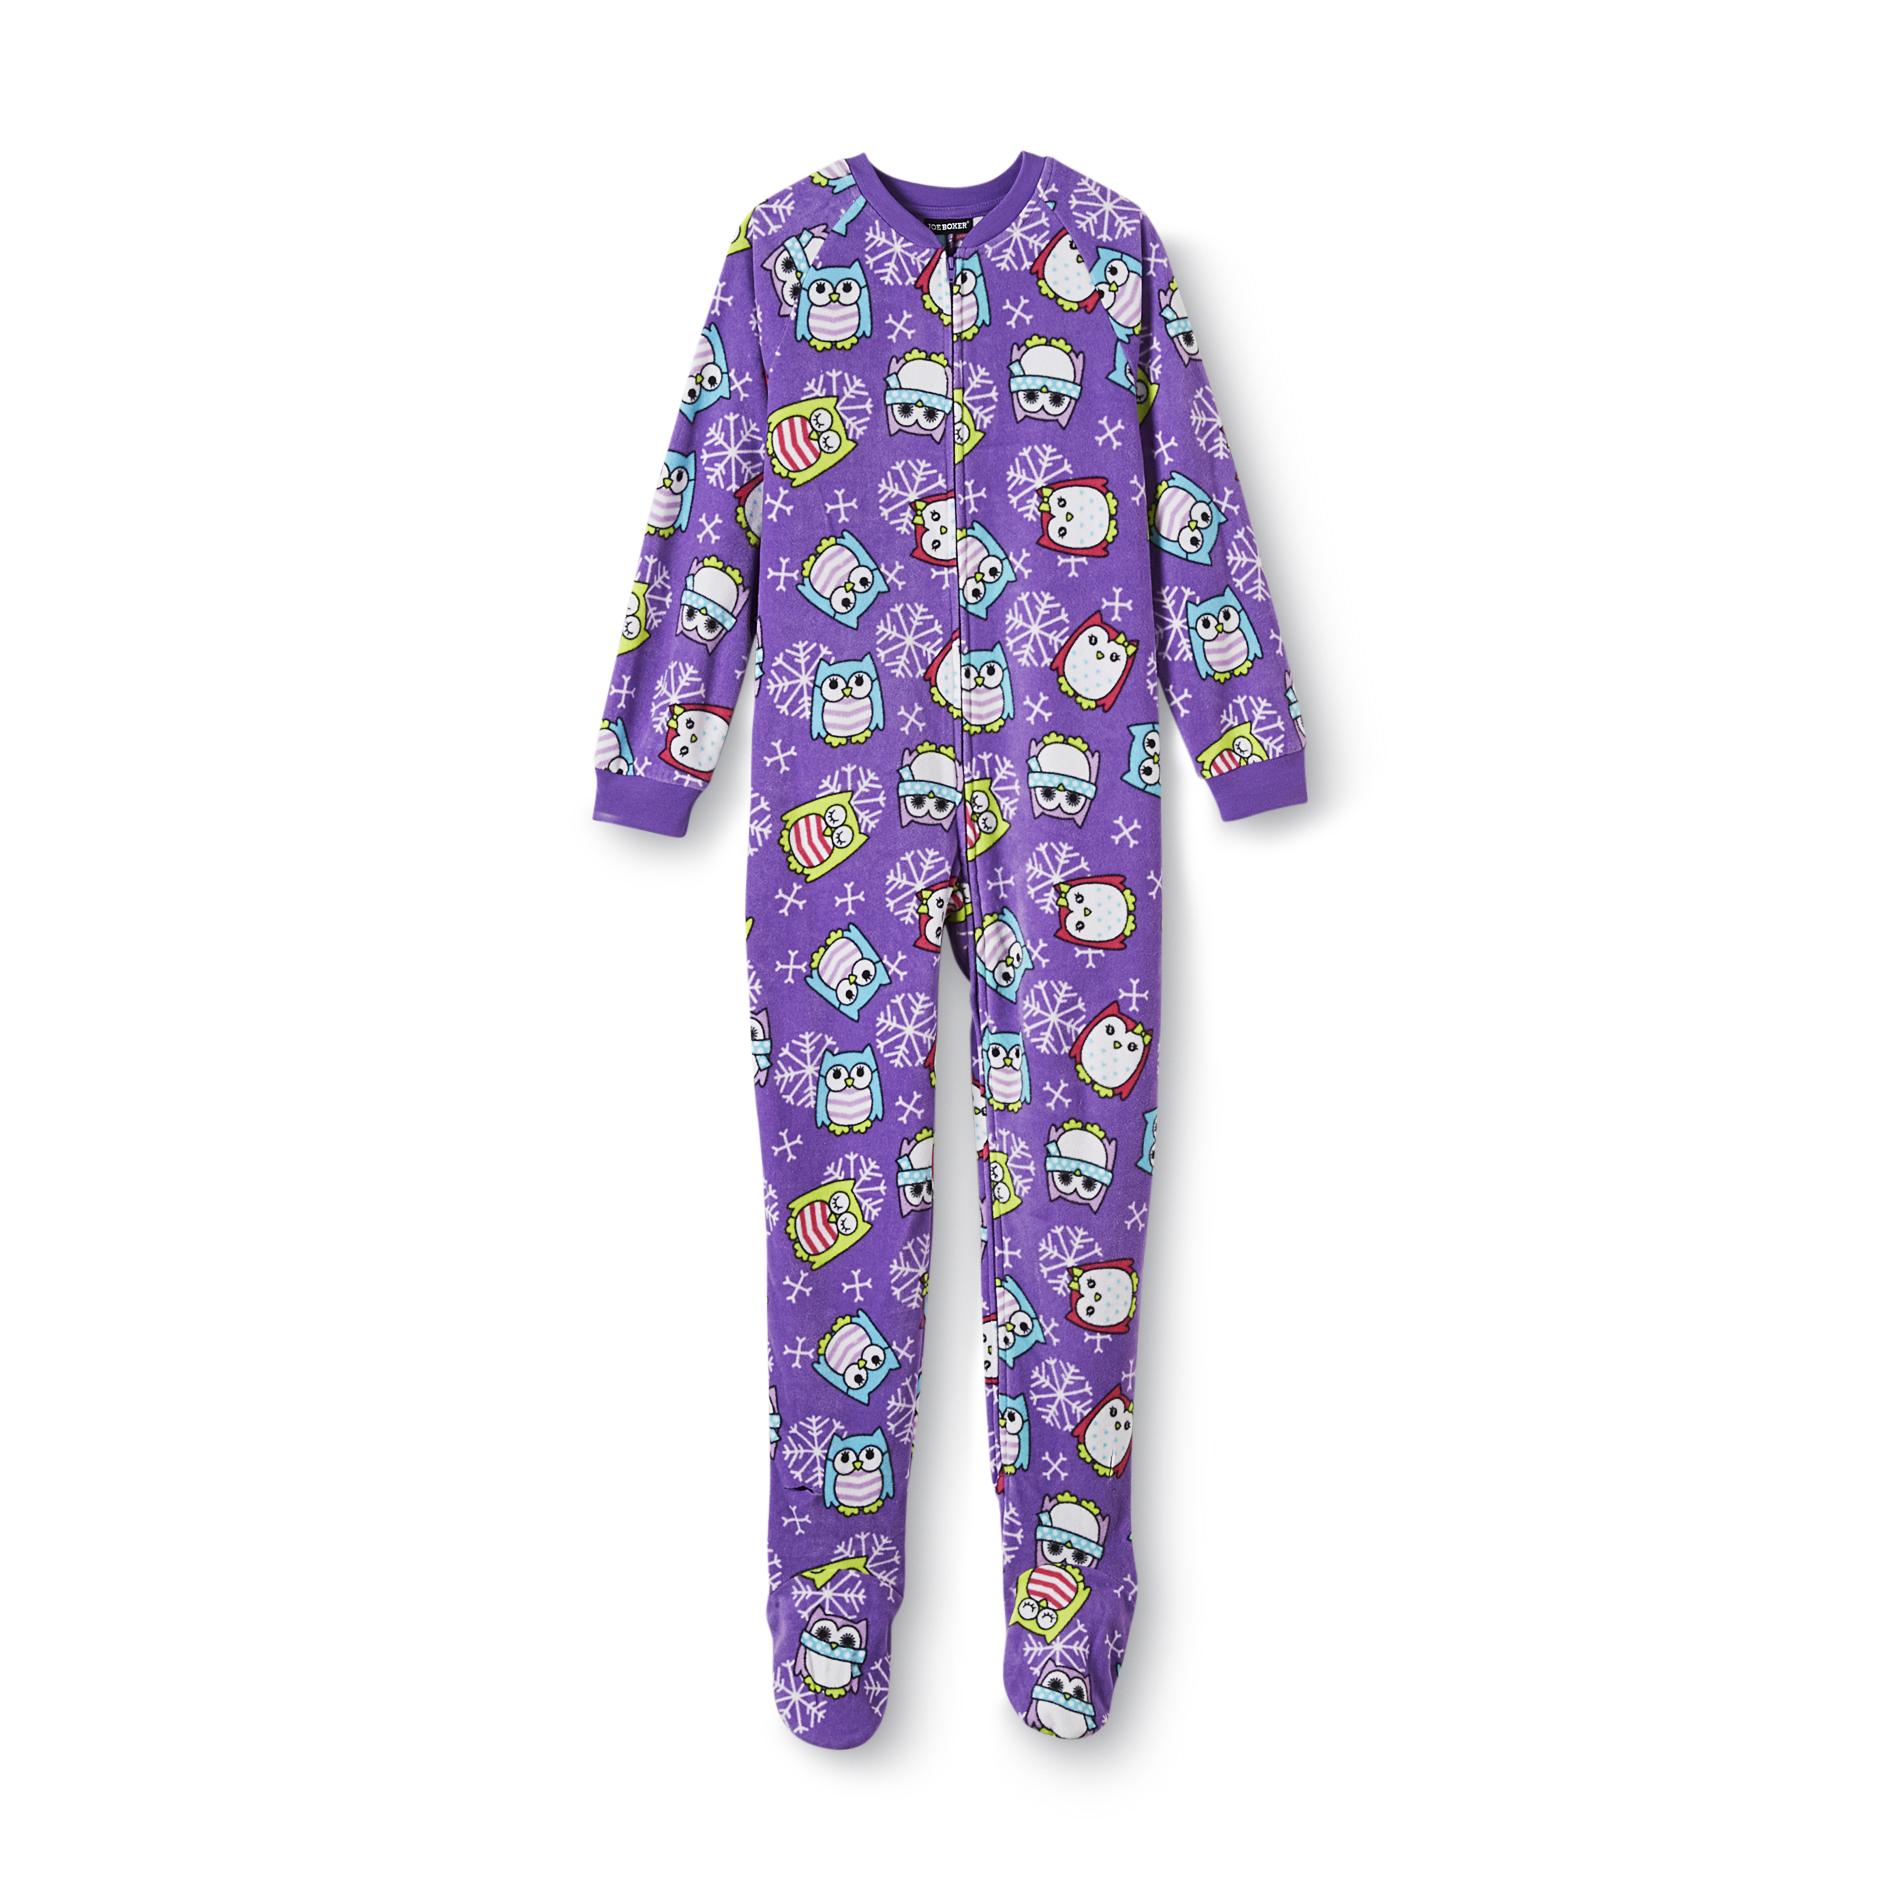 Joe Boxer Girl's Footed Fleece Pajamas - Owls